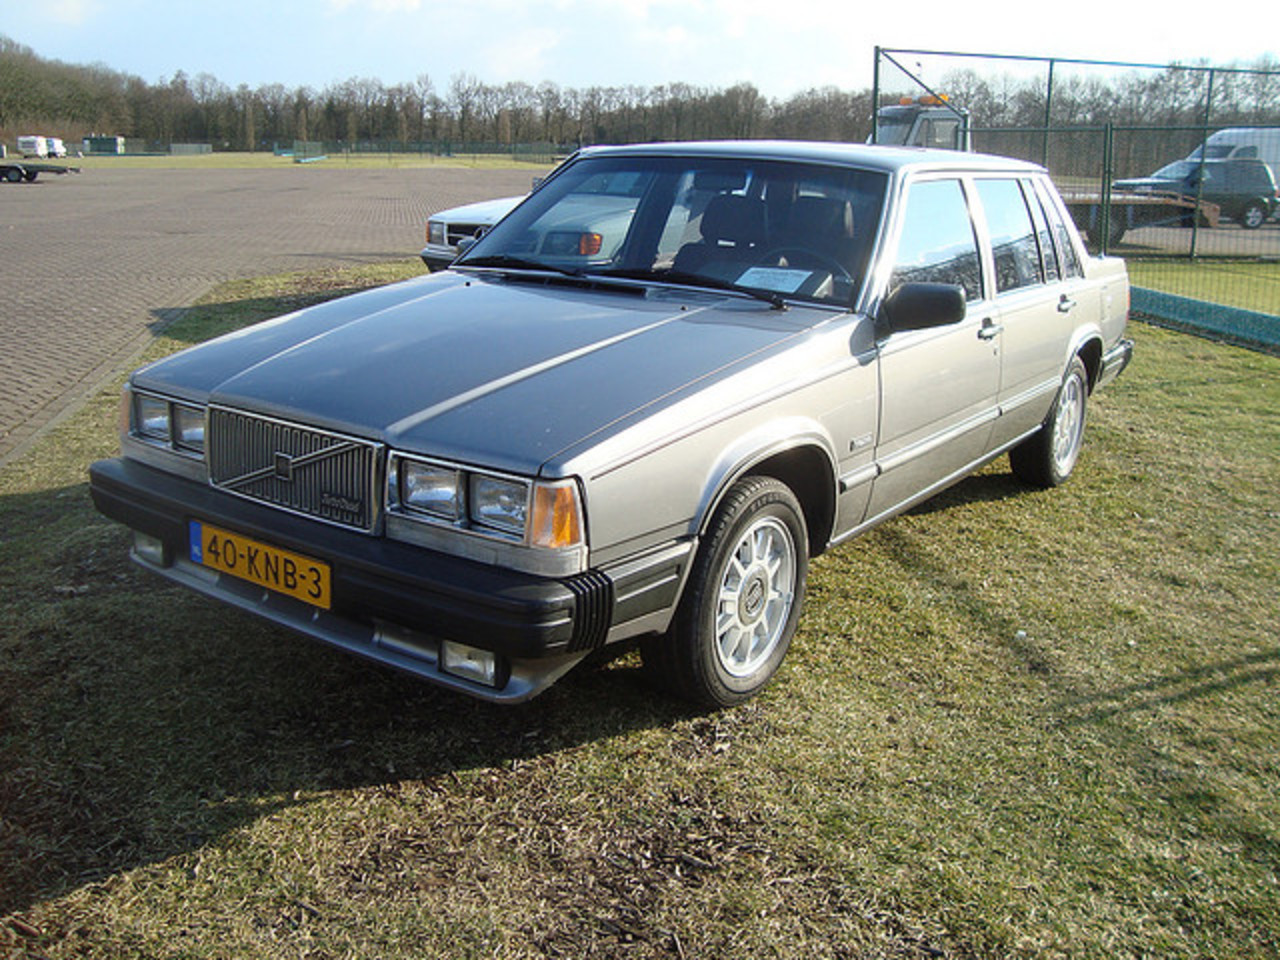 1984 Volvo 760 GLE (US spec) | Flickr - Photo Sharing!